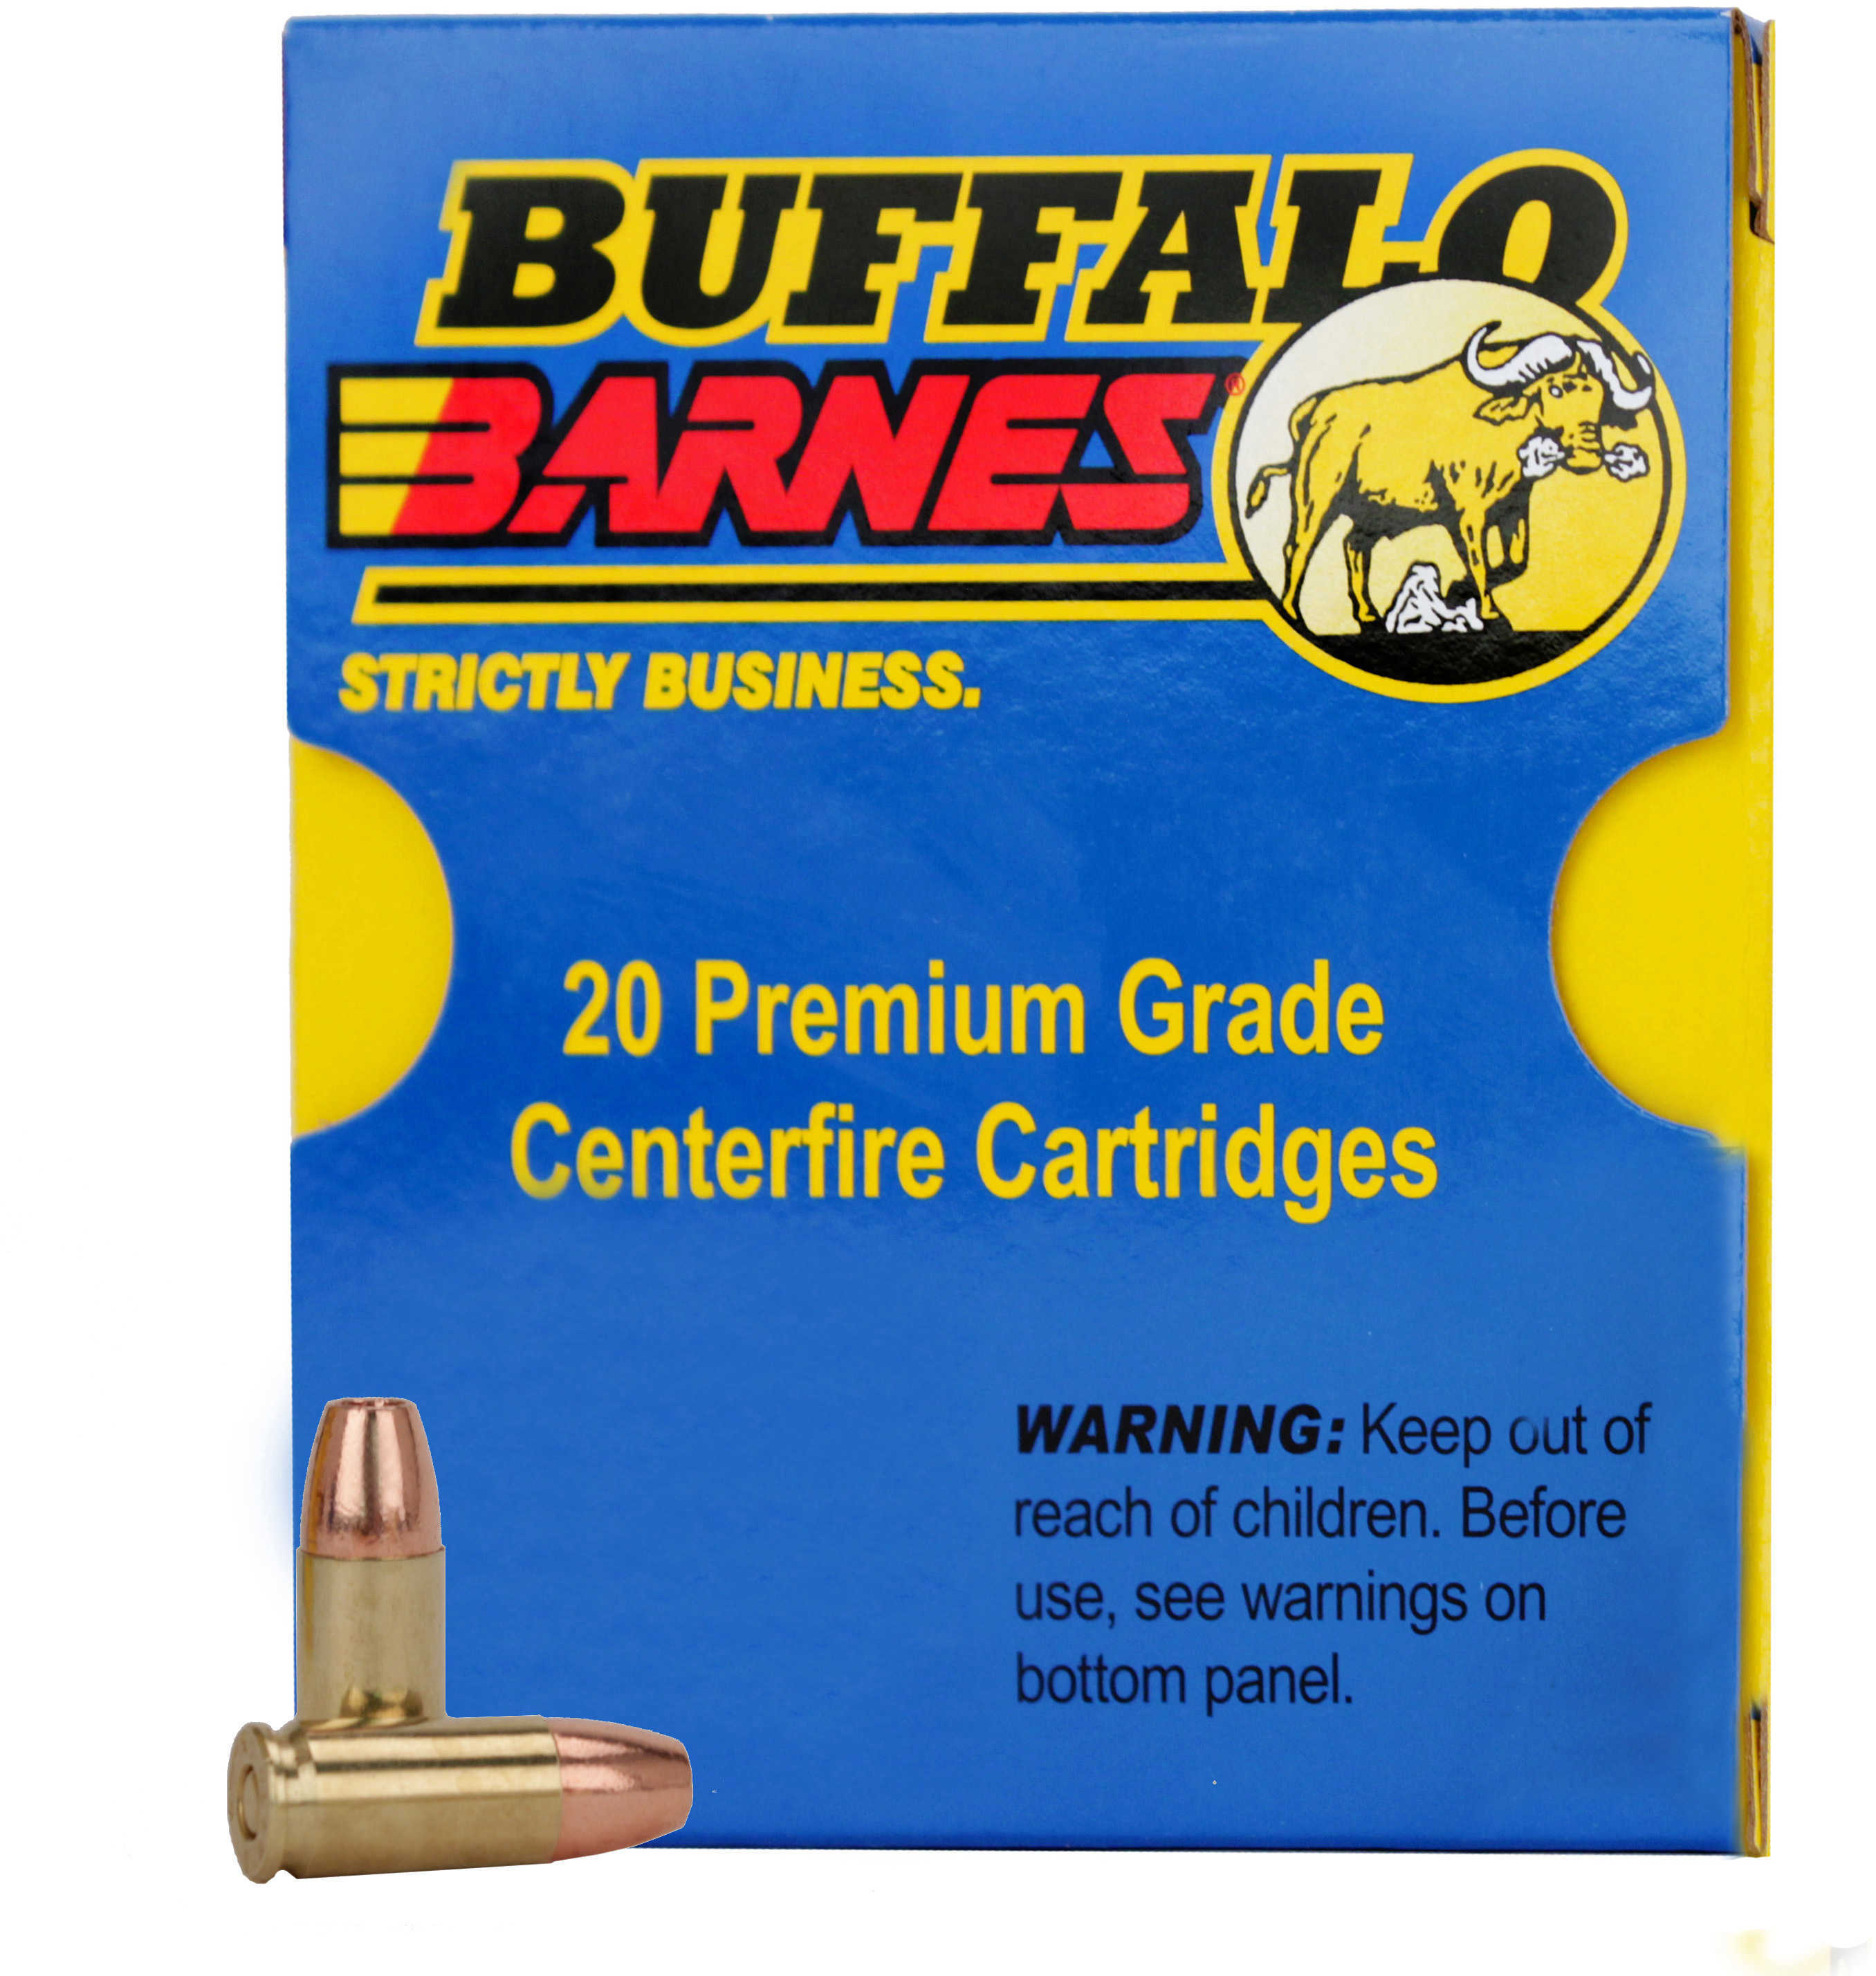 9mm Luger 95 Grain Hollow Point 20 Rounds Buffalo Bore Ammunition